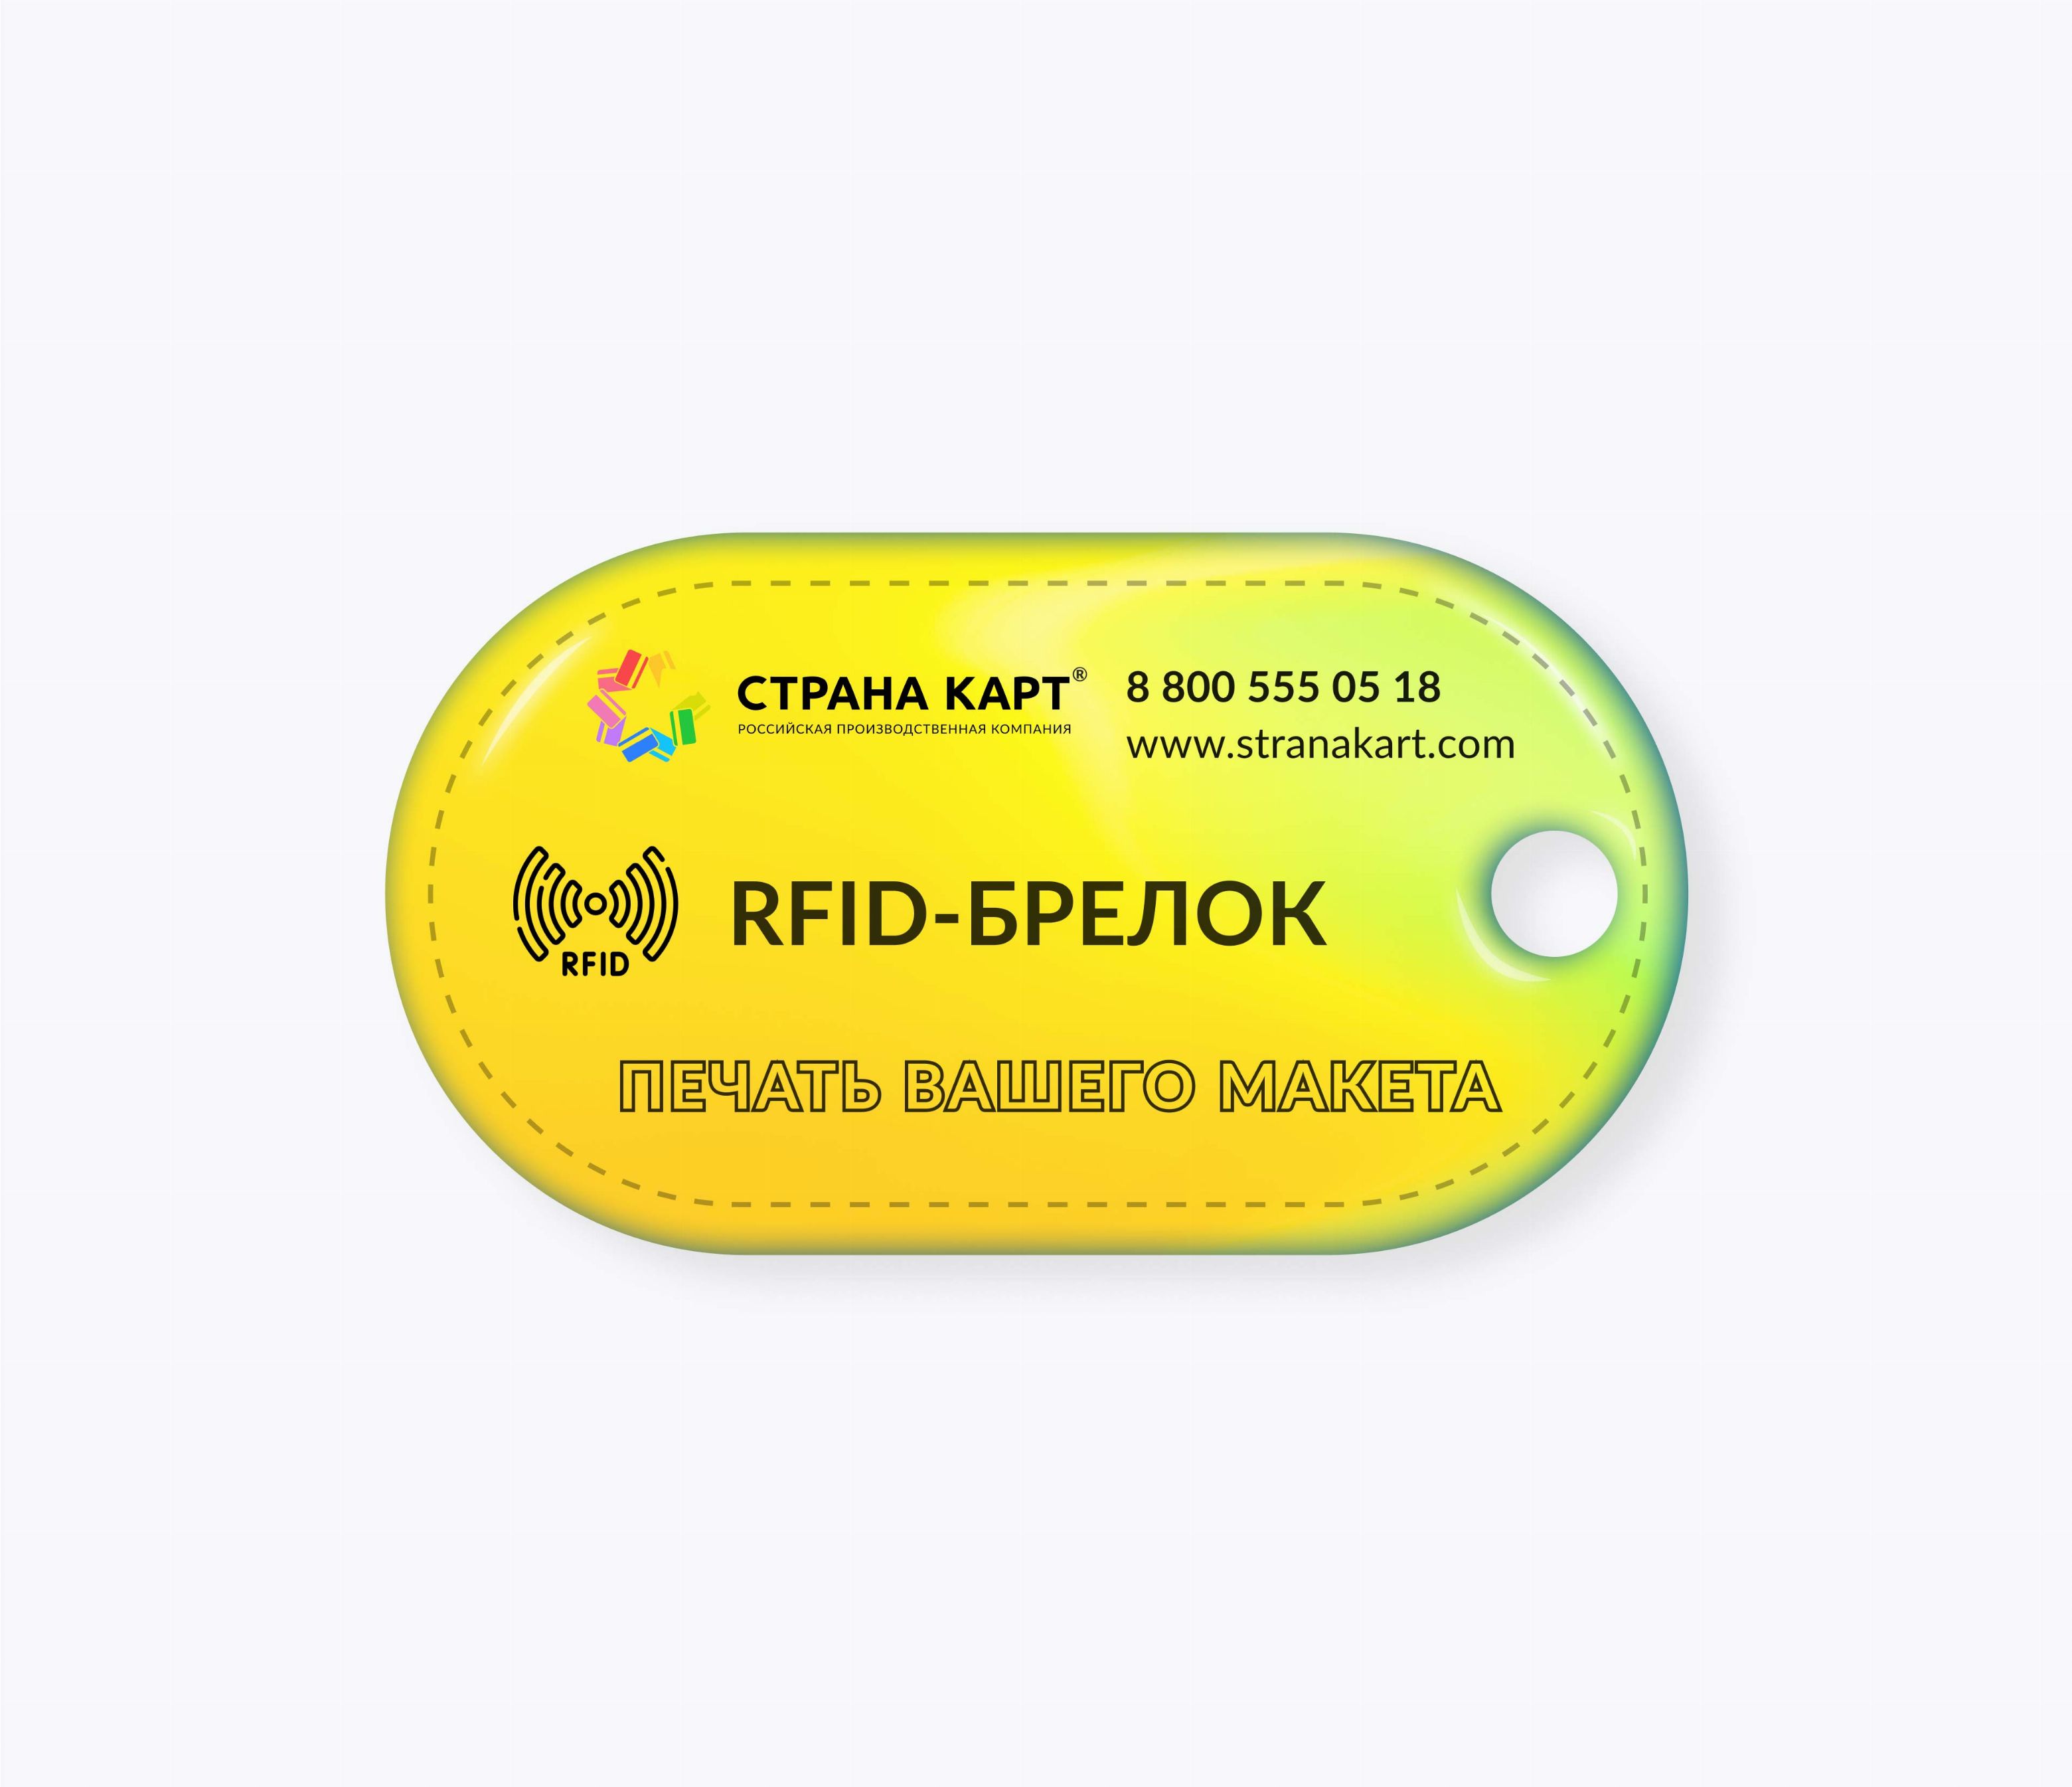 Овальные RFID-брелоки NEOKEY® с чипом  NXP MIFARE Ultralight C 7 byte UID RFID-брелоки NEOKEY® с чипом NXP MIFARE Ultralight C 7 byte UID и вашим логотипом